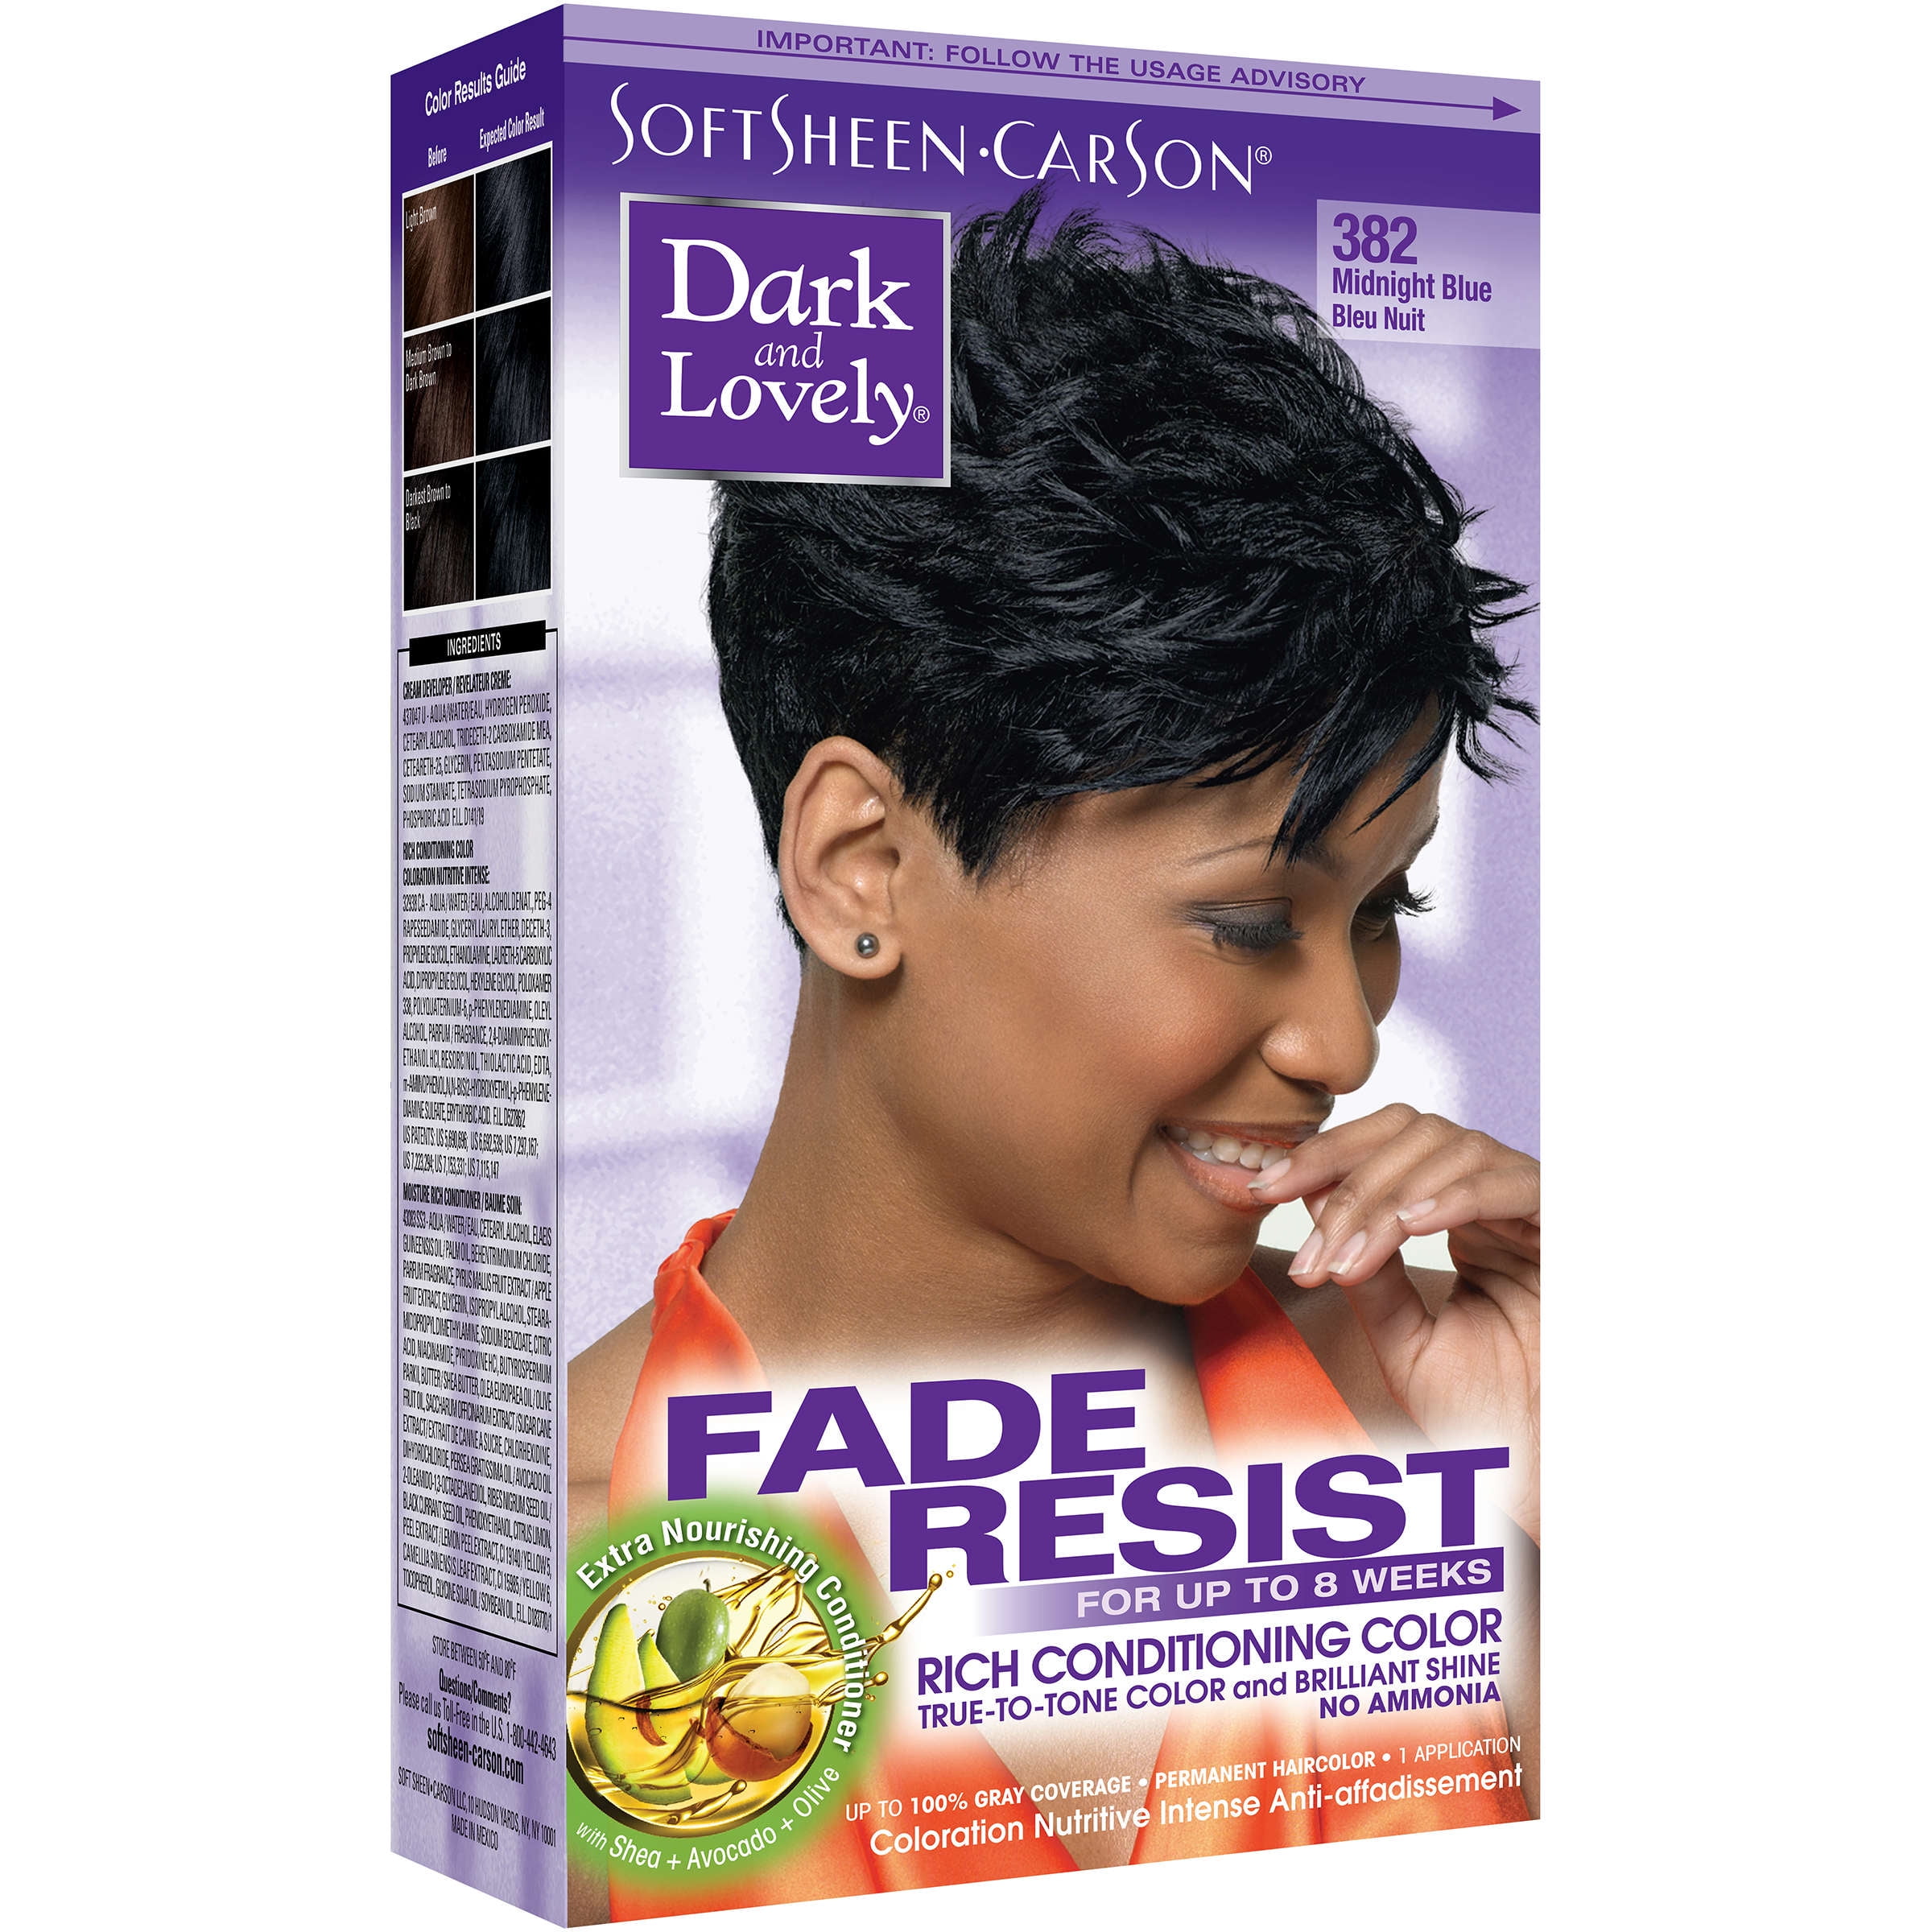 Softsheen Carson Dark And Lovely Fade Resist Rich Conditioning Color Midnight Blue 382 Walmart Com Walmart Com